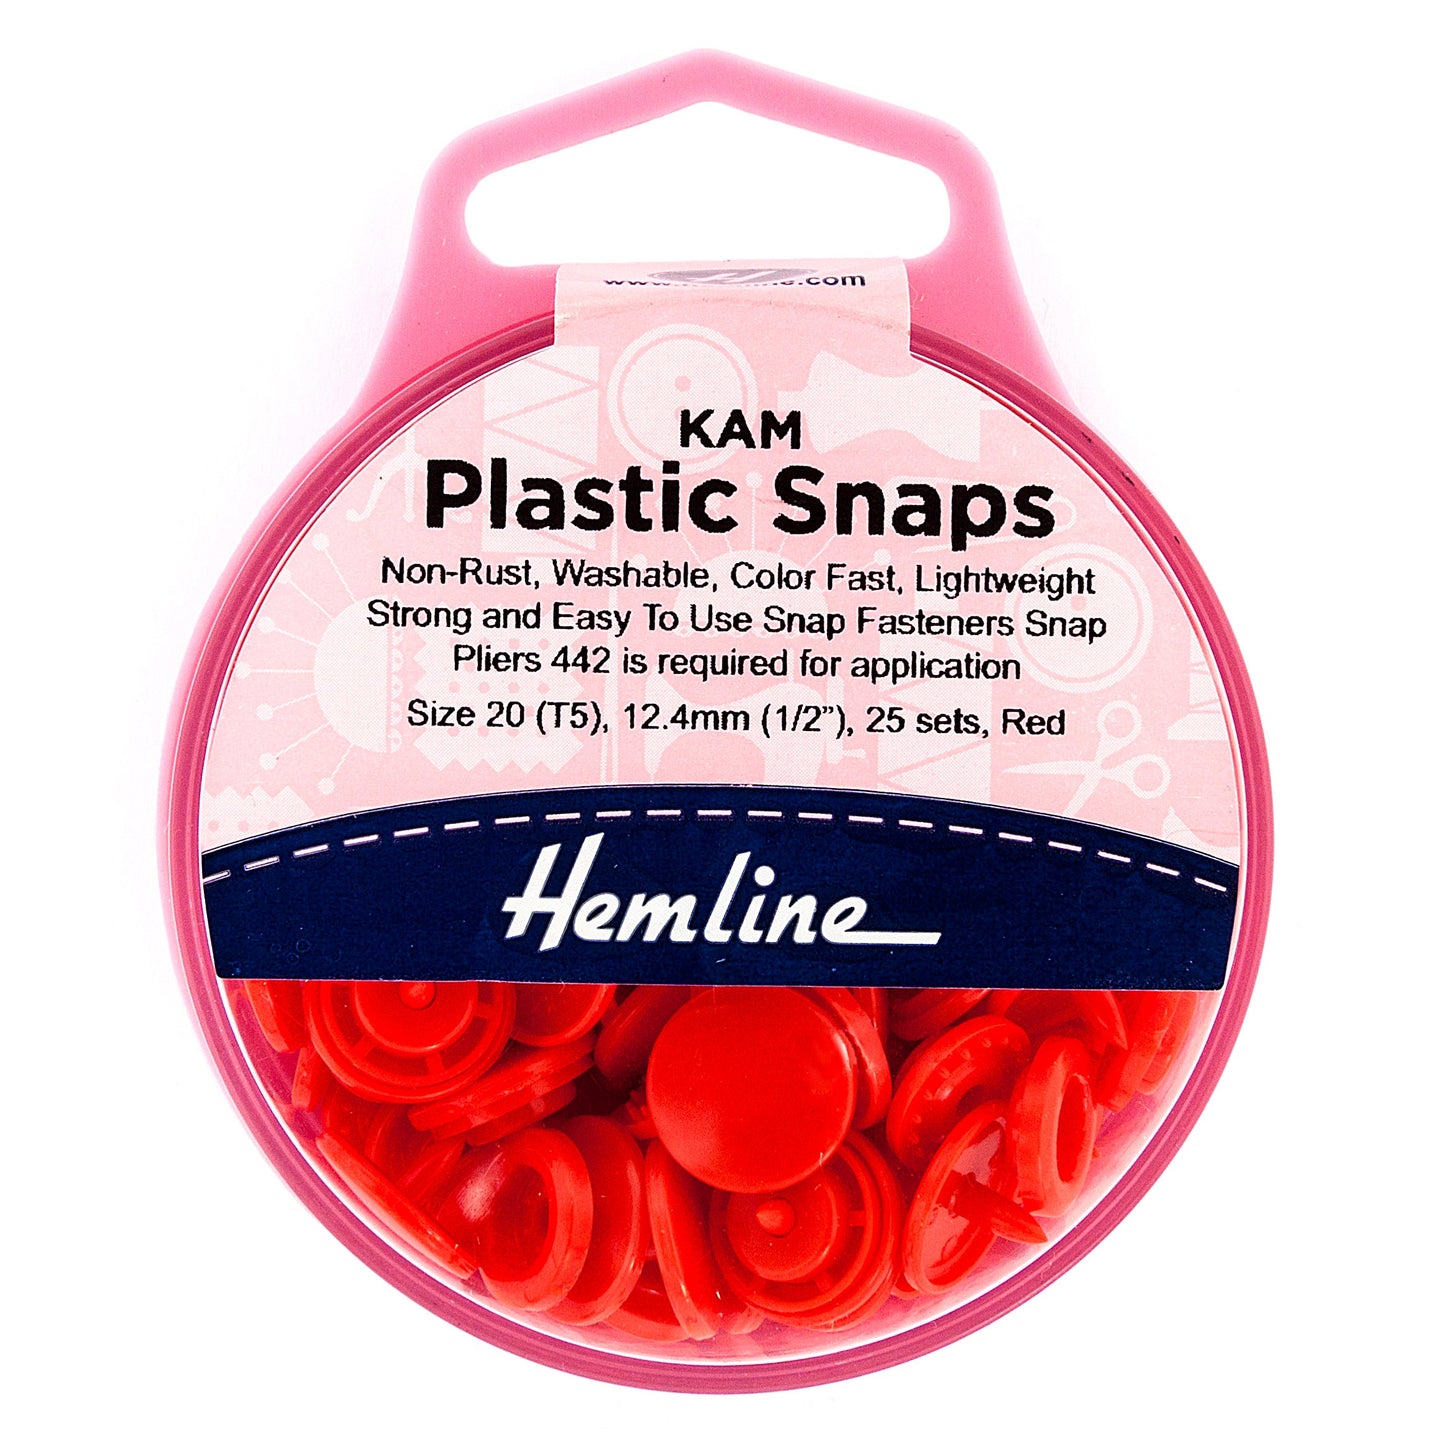 Hemline Plastic Snaps 25 x 12.4mm sets | EN71, REACH & Annex II Compliant